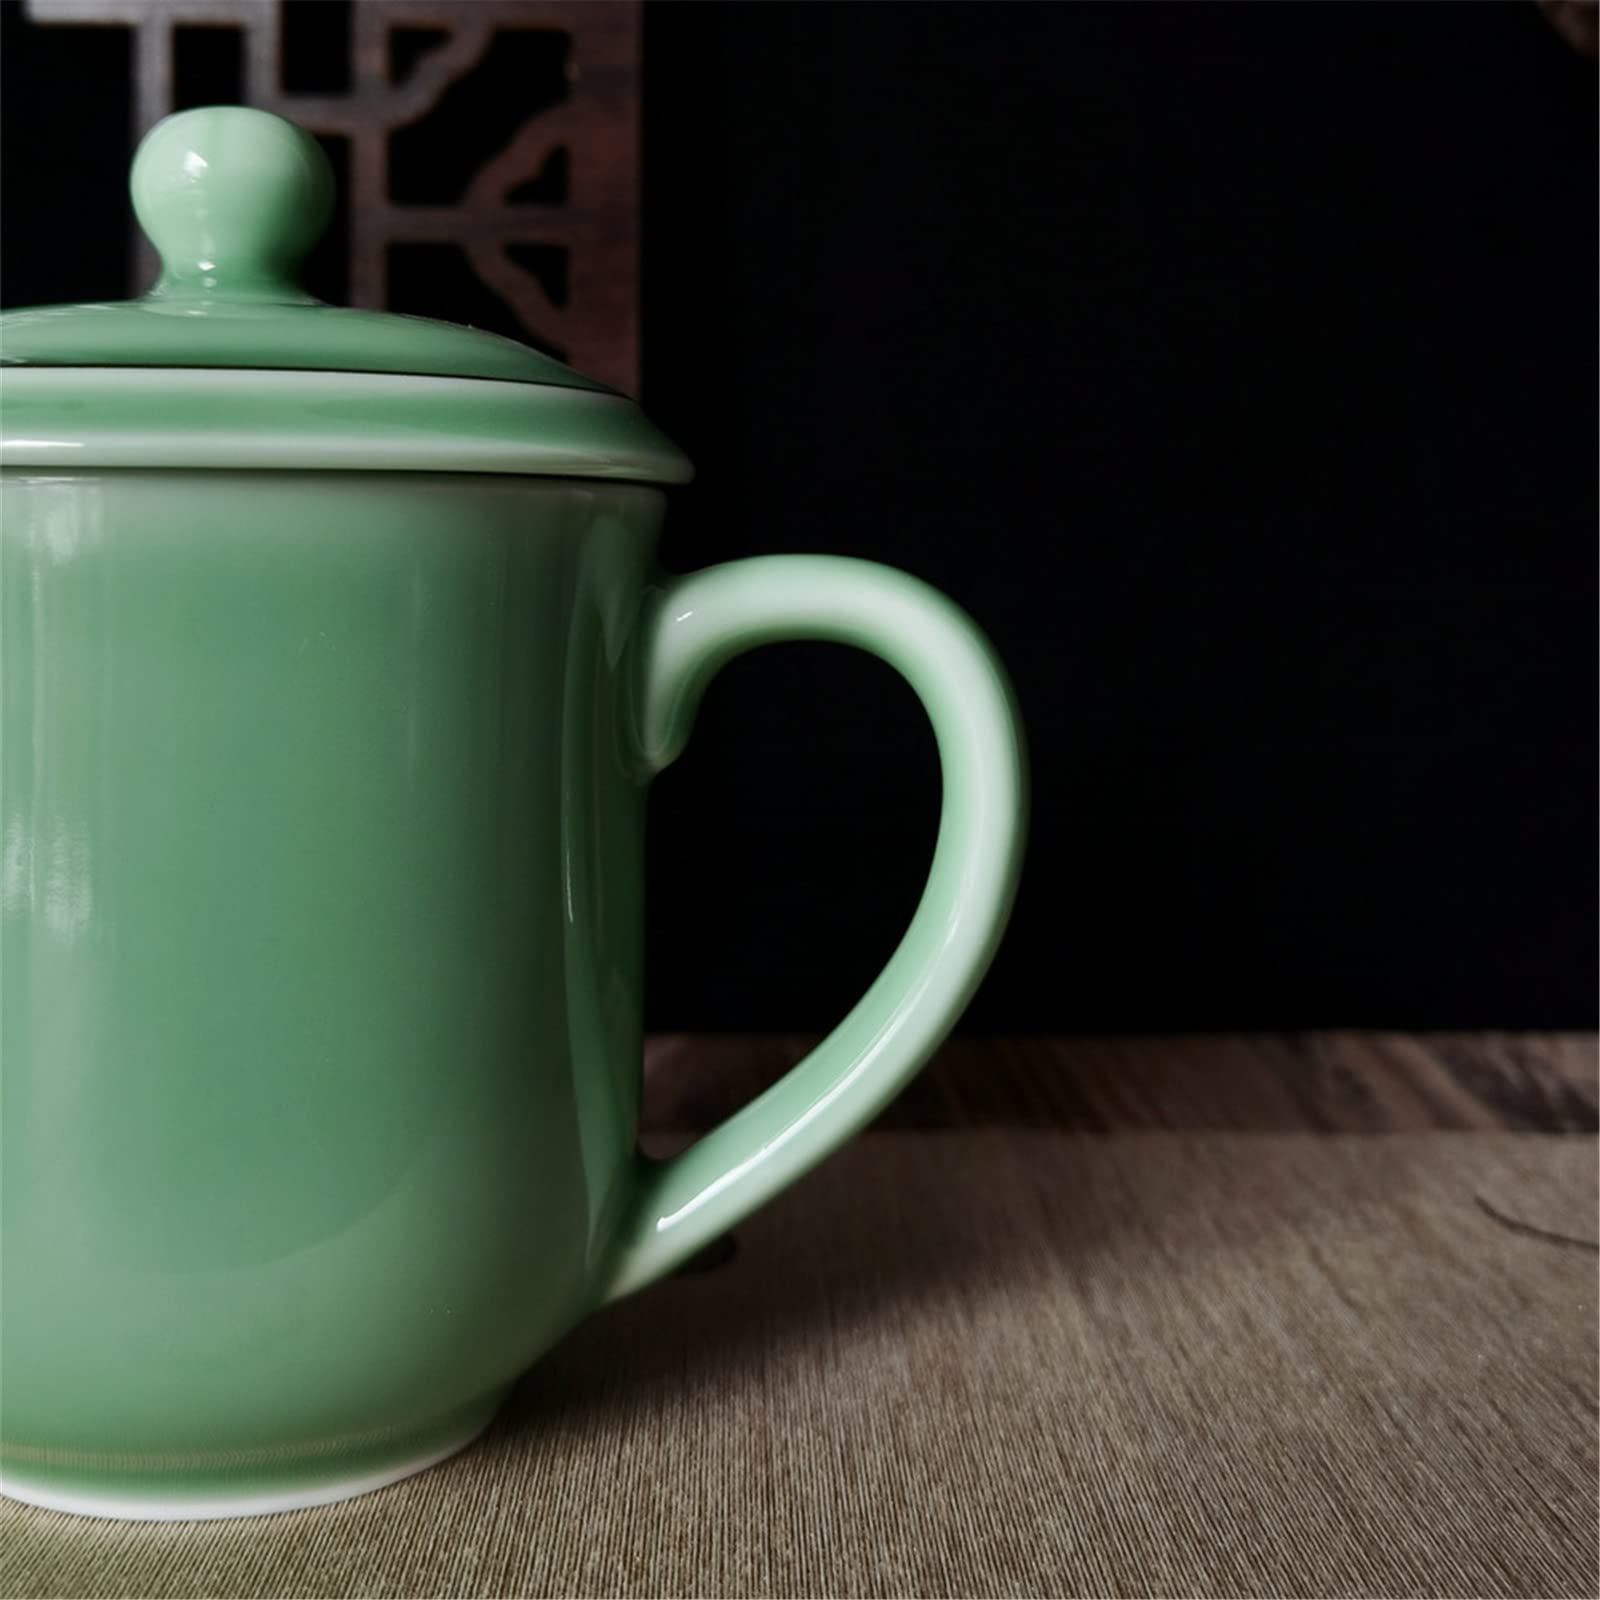 Handmade Celadon Coffee Mug Teacup with Lid 13oz Porcelain Milk Cup Smooth Glazed Ceramic Microwave and Dishwasher Safe (Green)